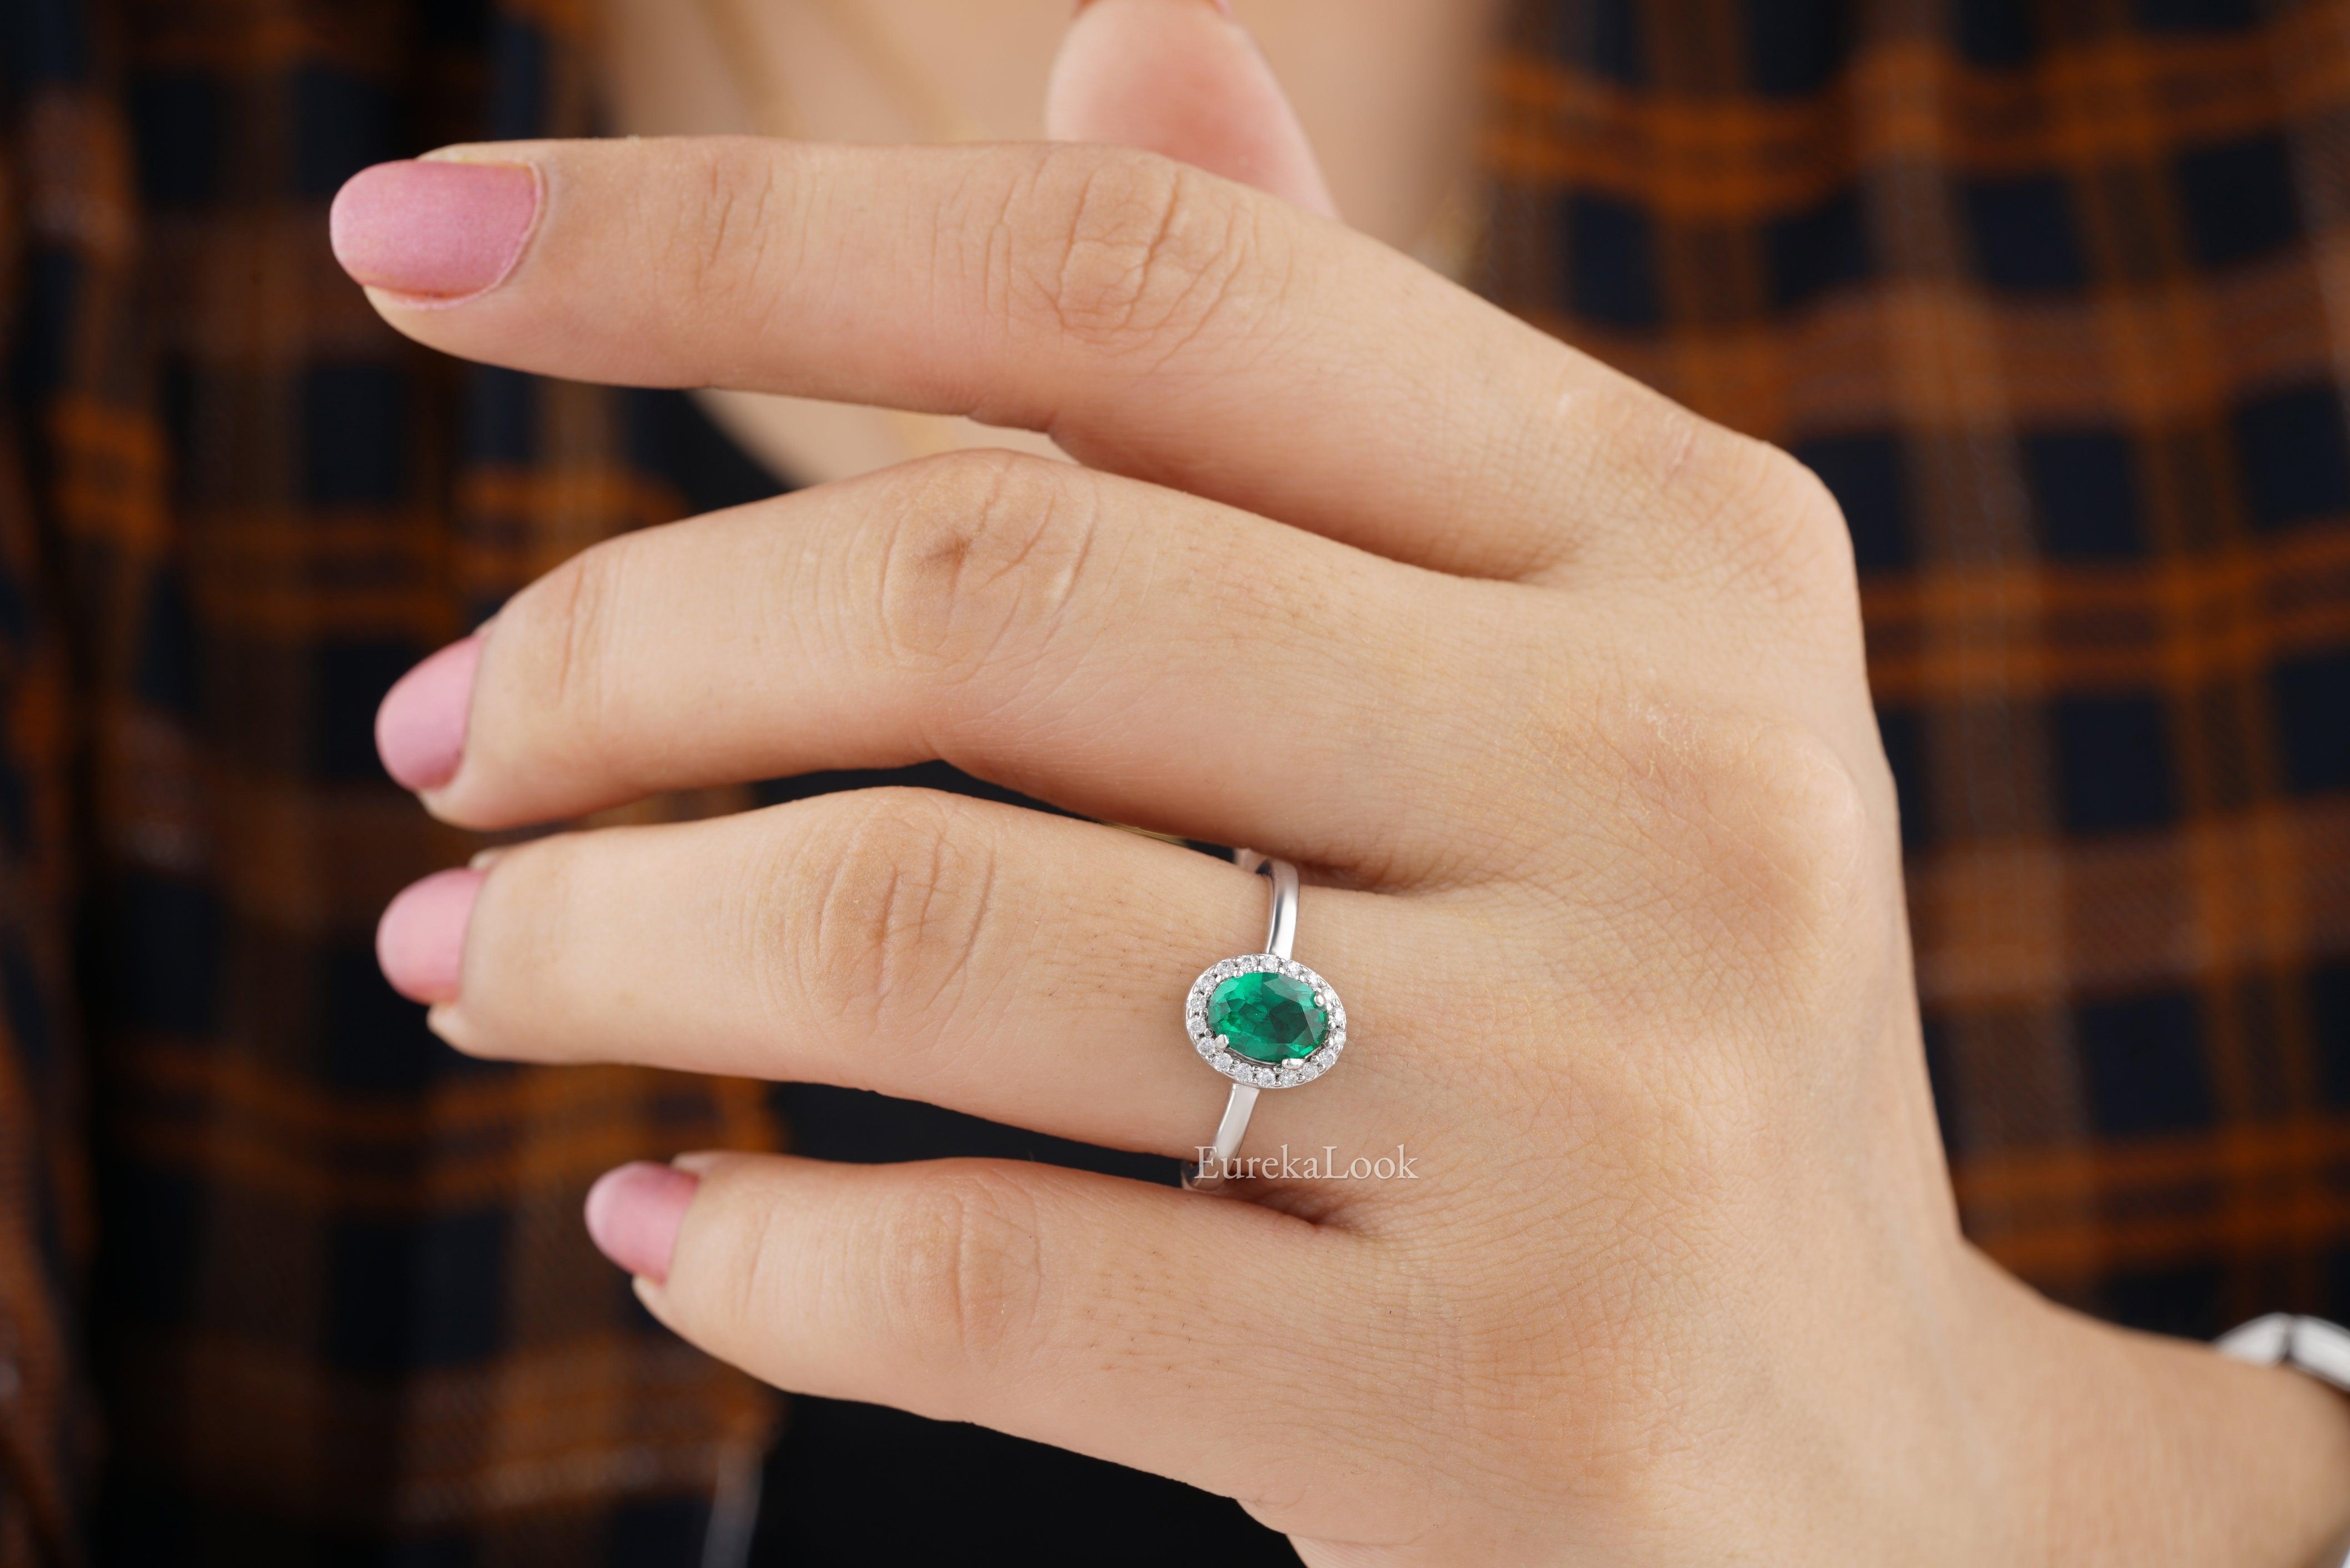 Oval-Cut Emerald Diamond Halo Wedding Ring - Eurekalook